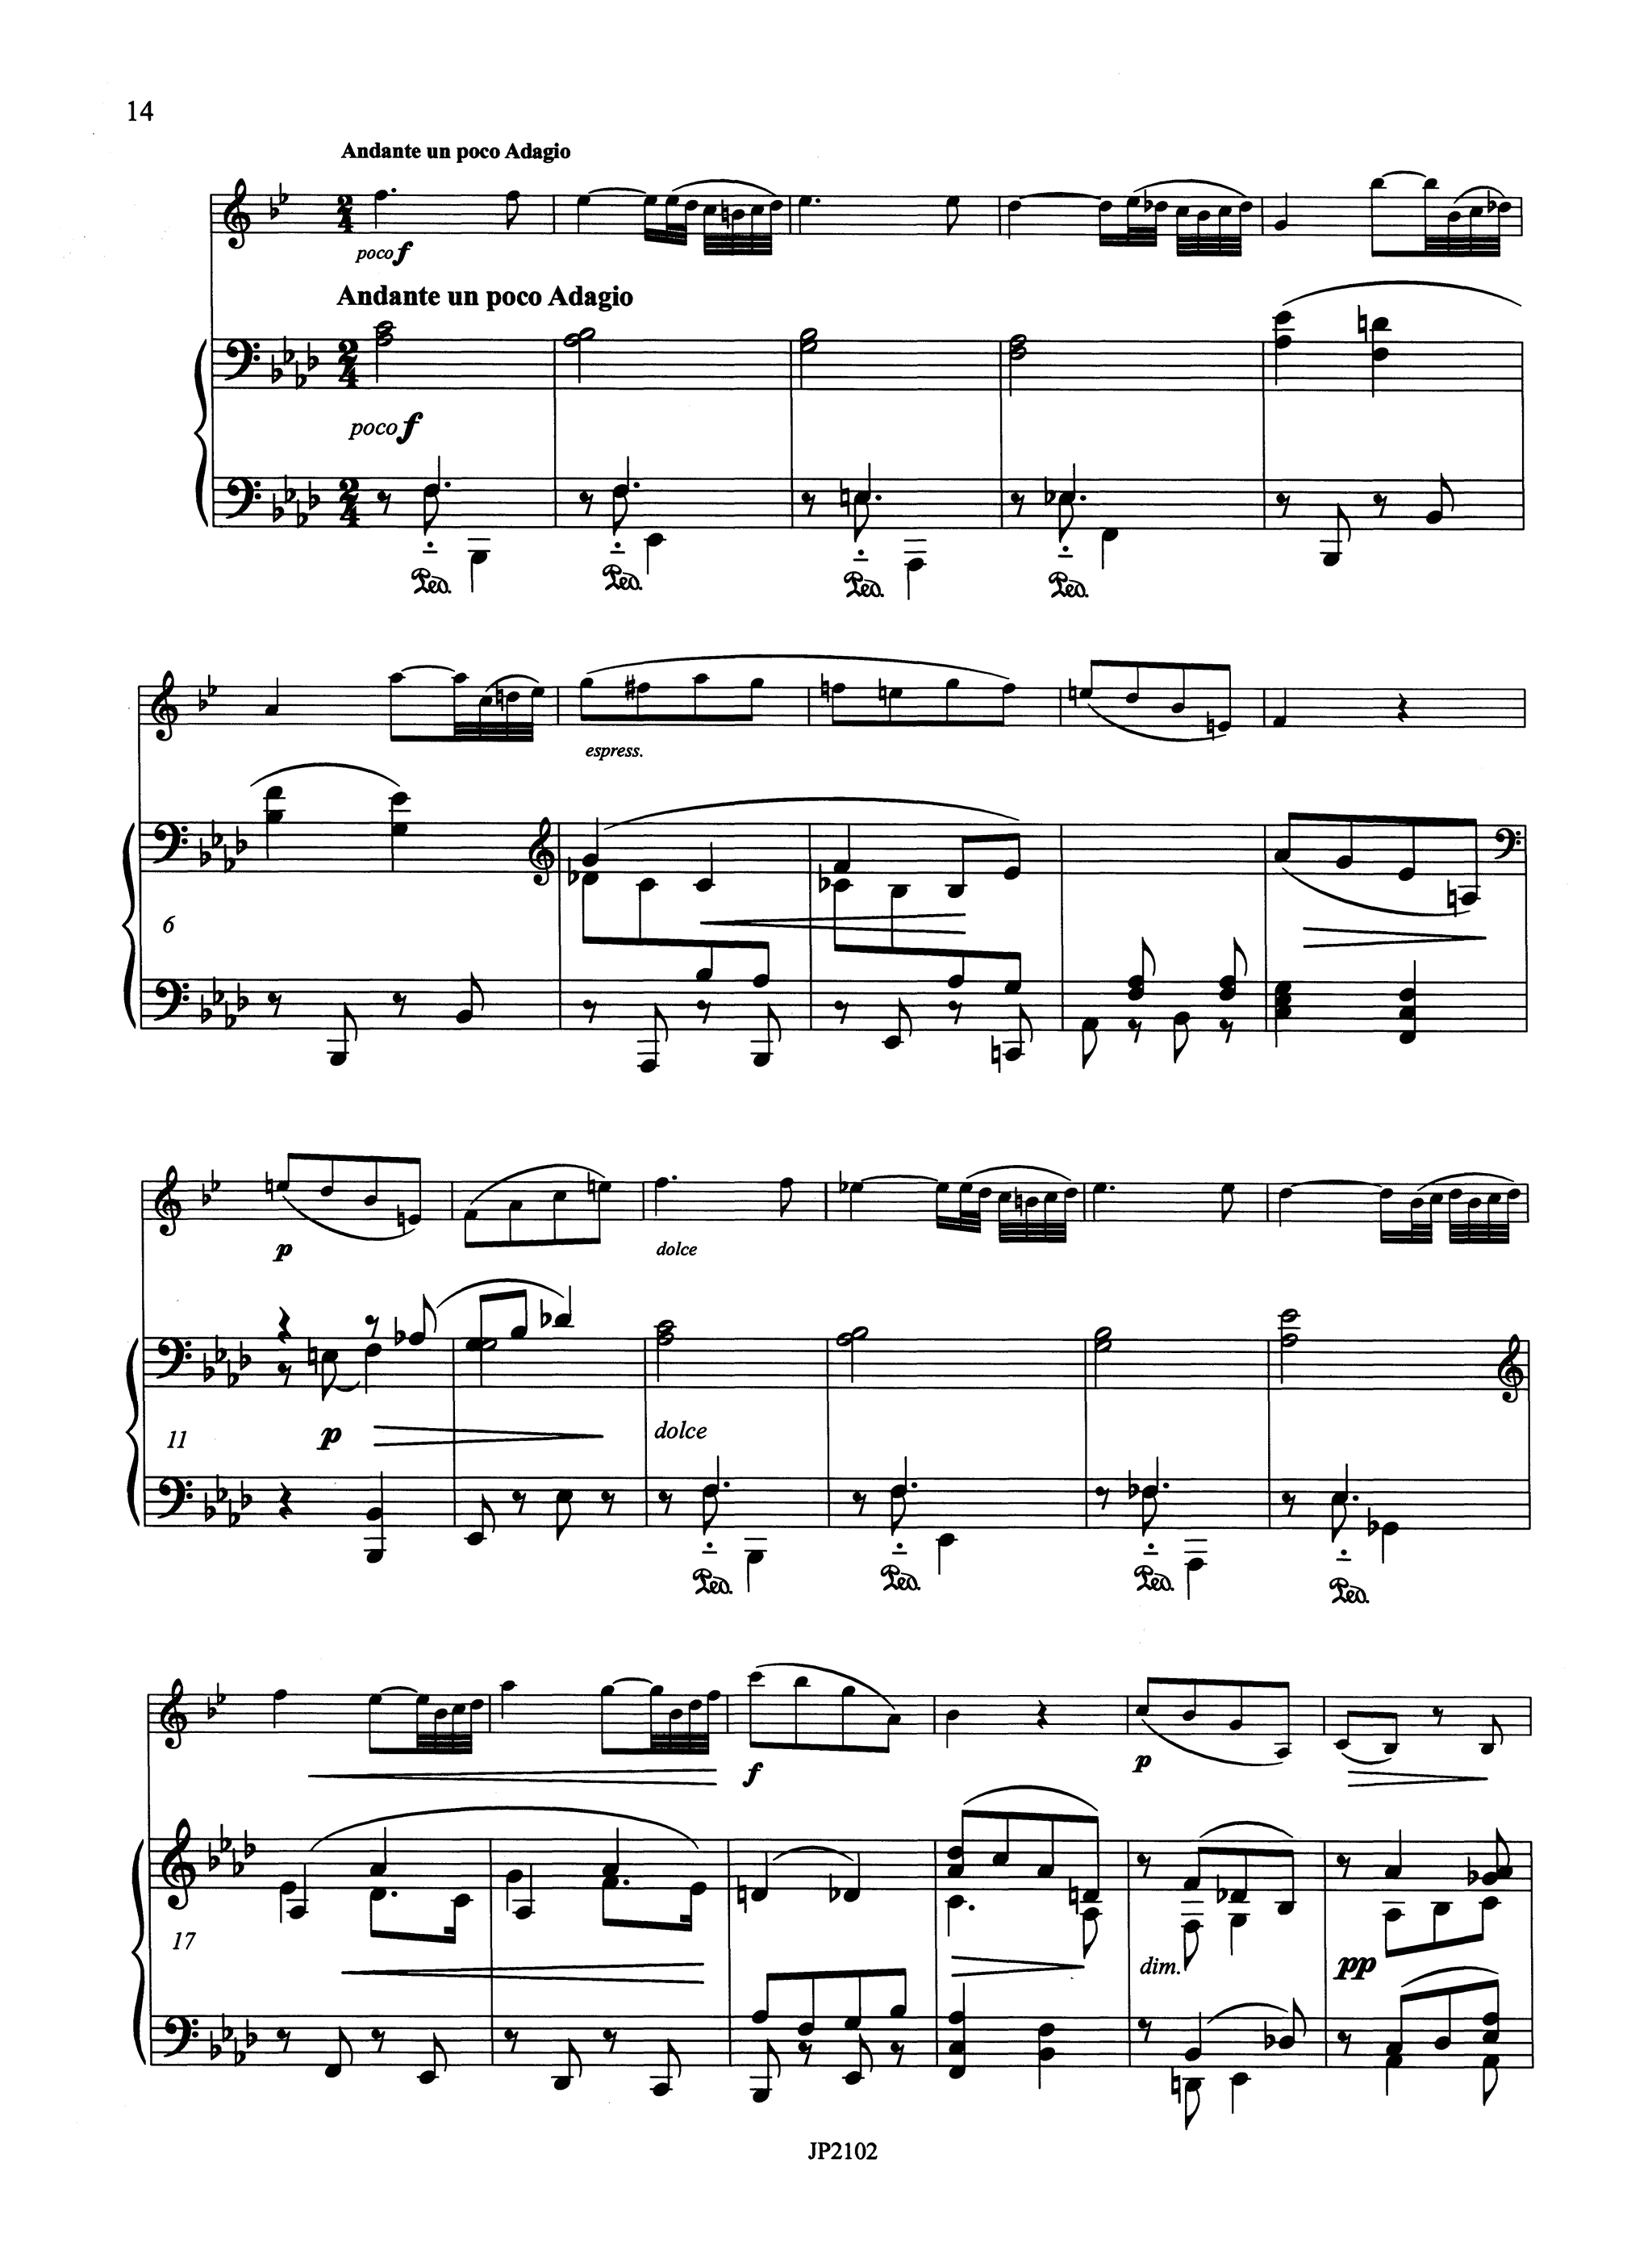 Brahms Sonata in F Minor, Op. 120 No. 1 - Movement 2